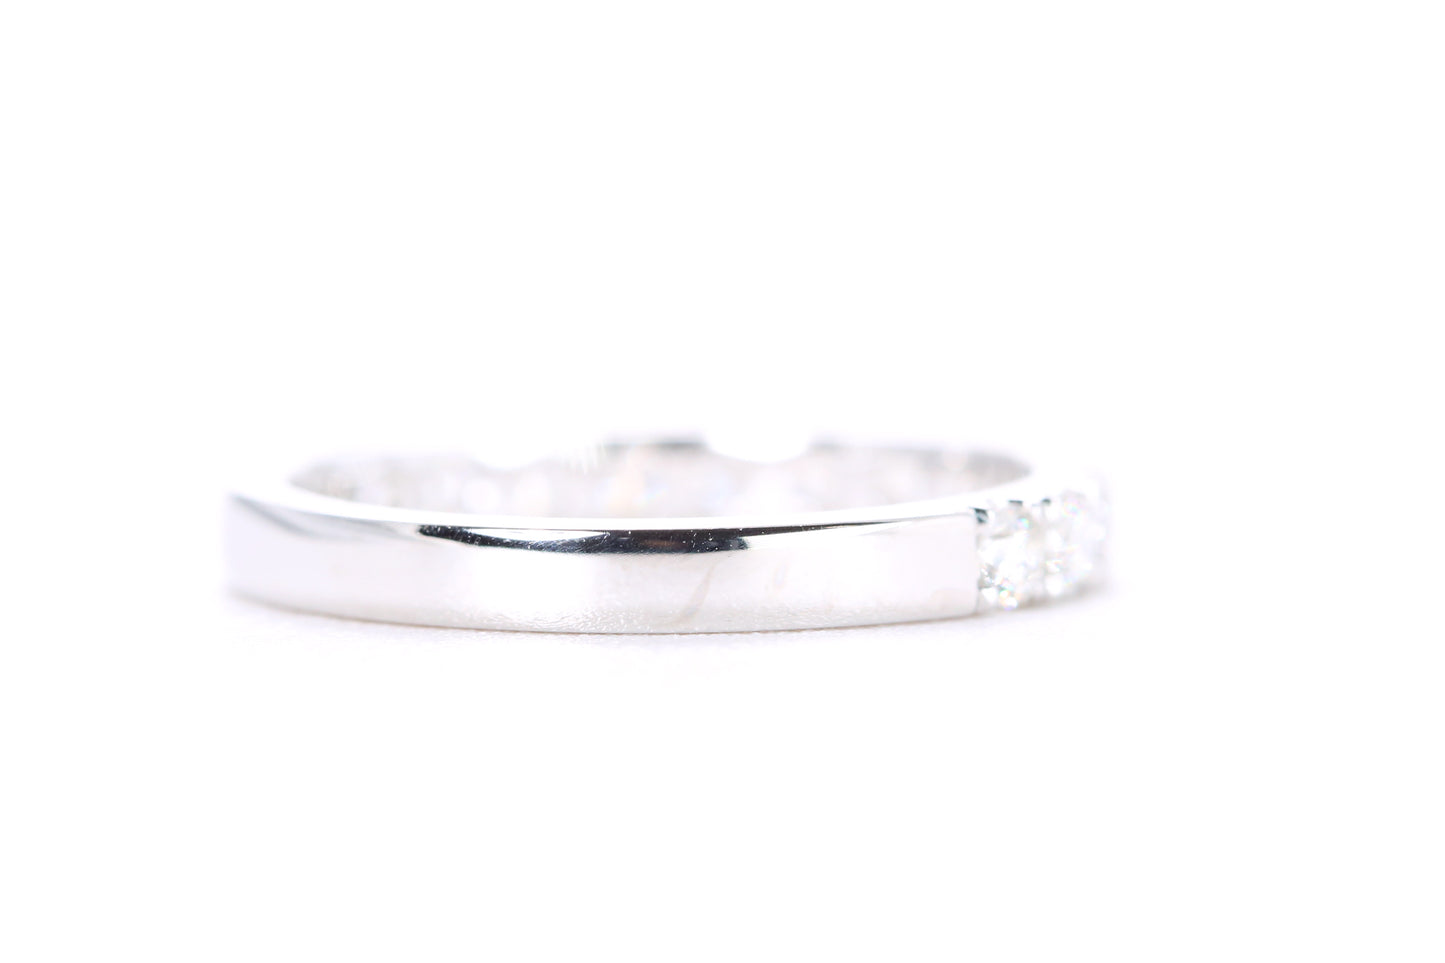 Micro Pavé Diamond Ring 1/2 Carat in White Gold